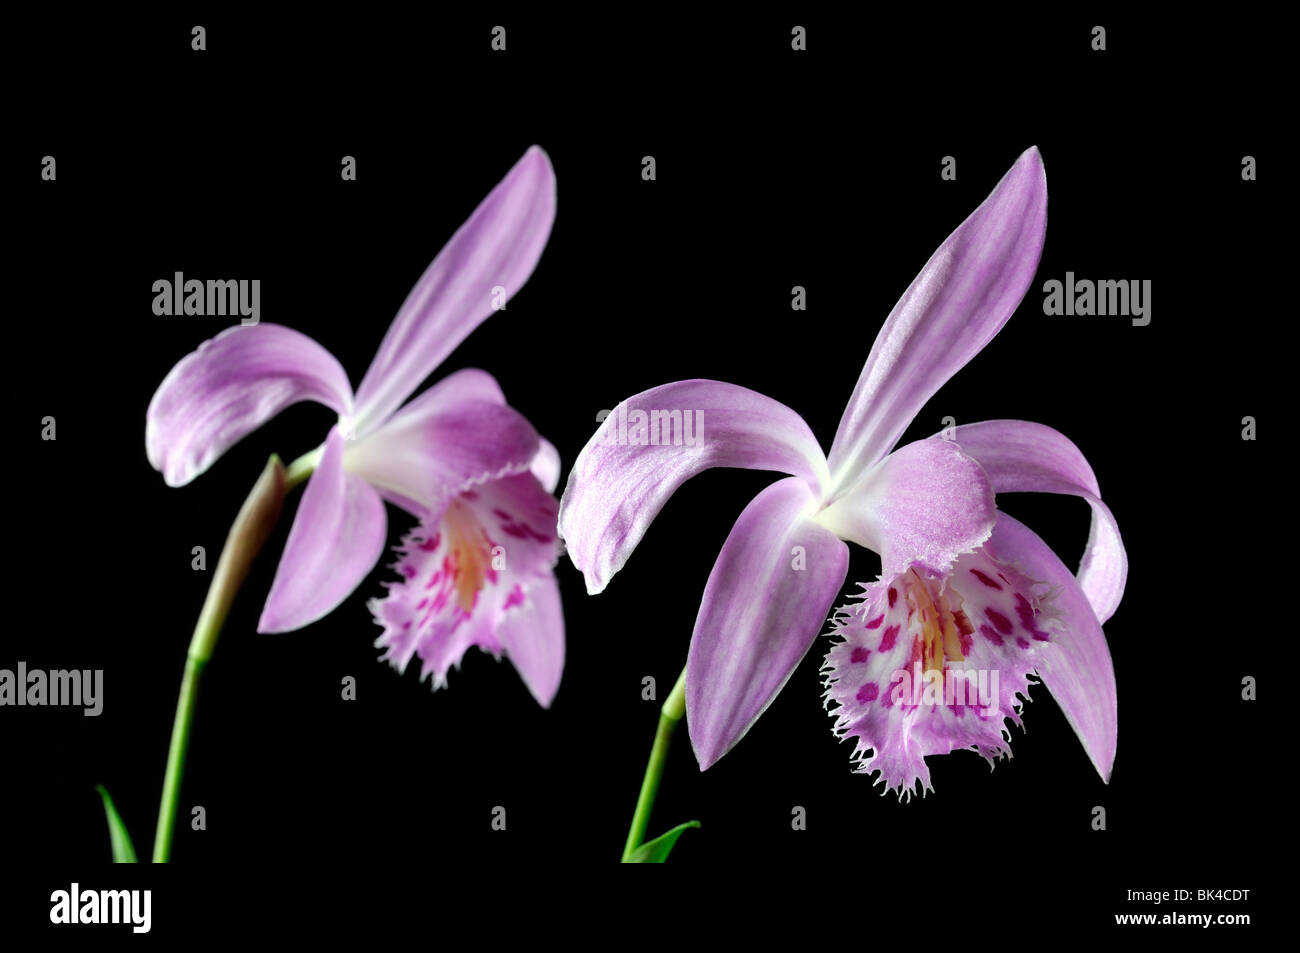 Pleione piton hybrid windowsill orchid flower plant pink purple white set contrast contrasted black dark background Stock Photo